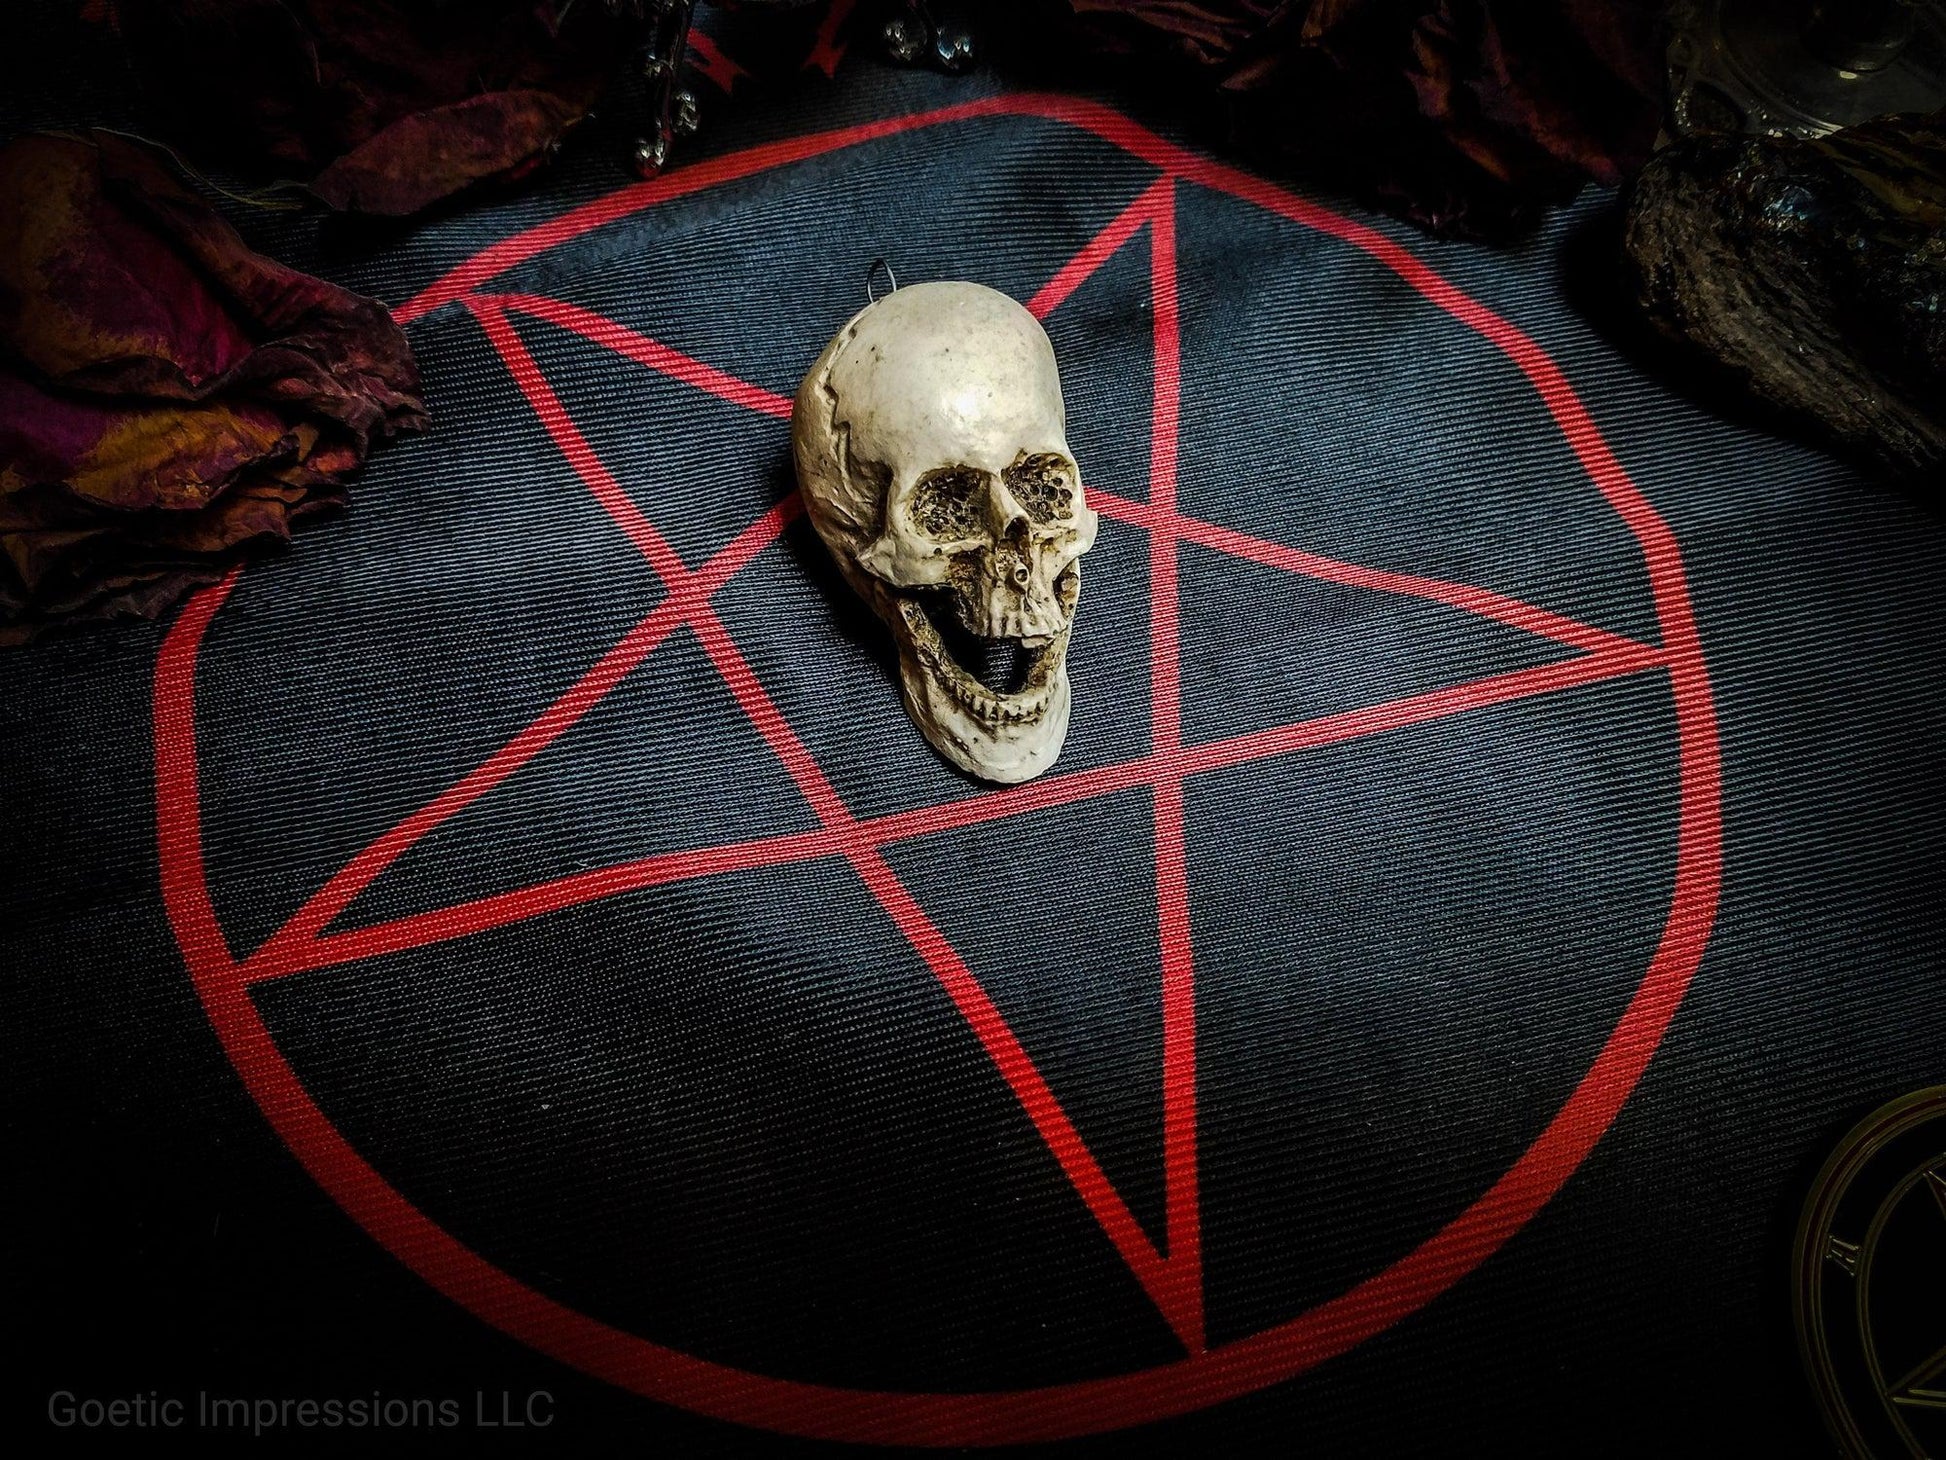 Pentagram altar cloth with skull